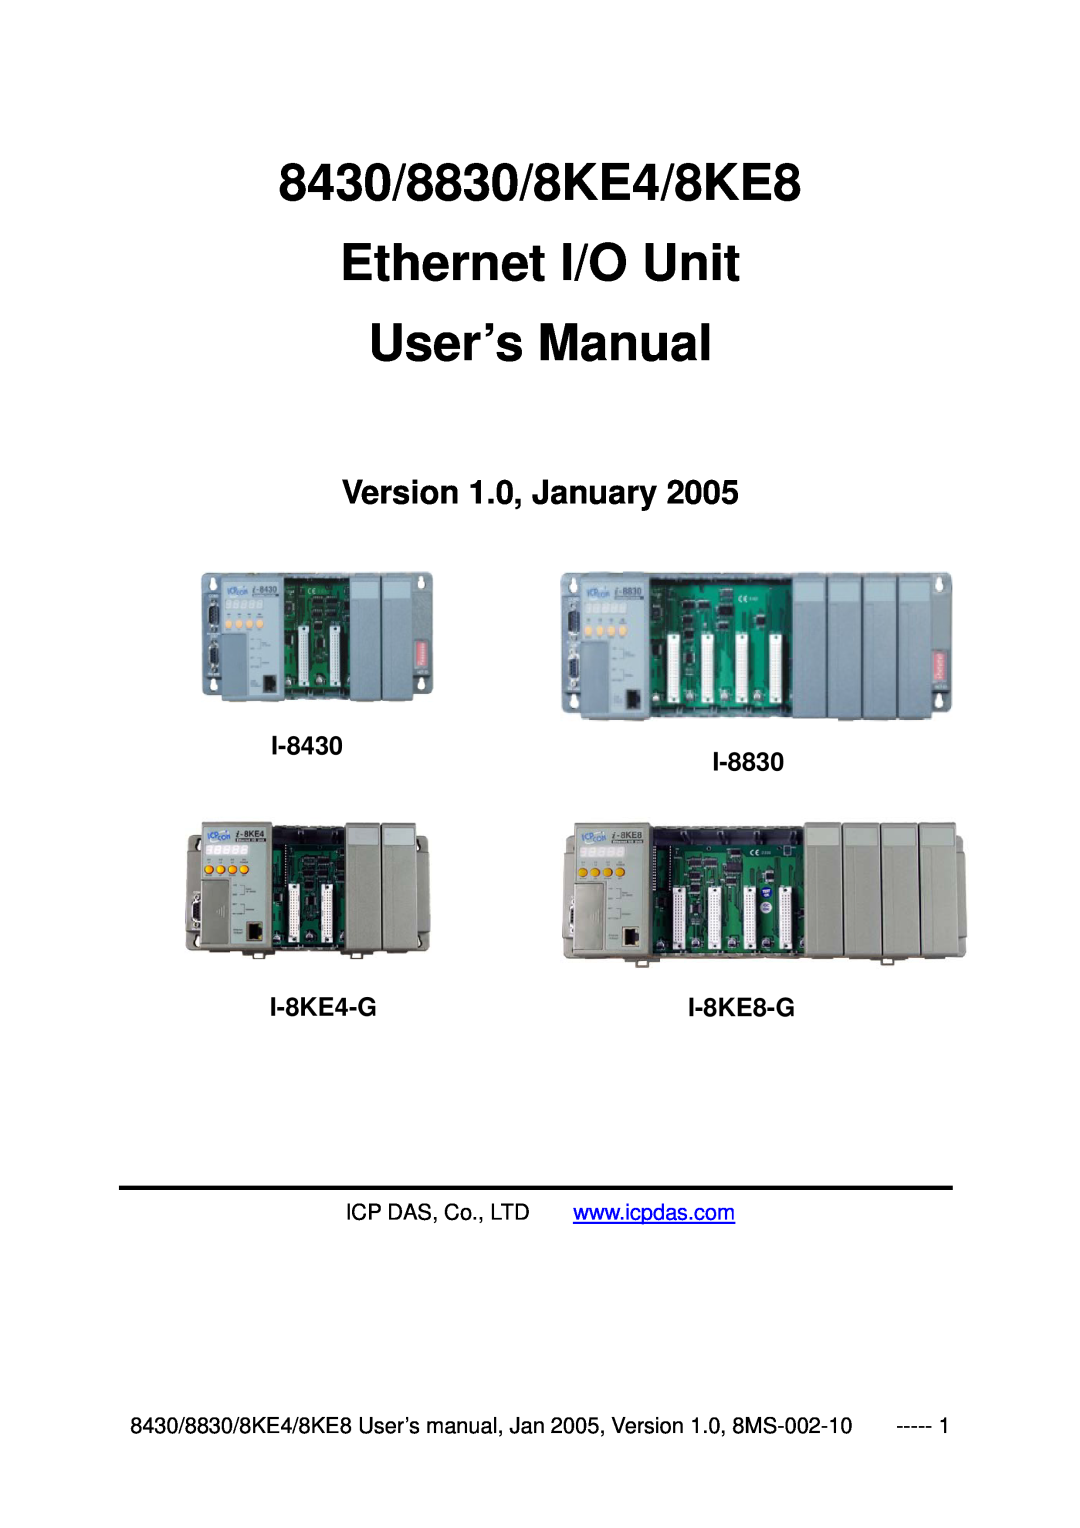 ICP DAS USA user manual Version 1.0, January, I-8430I-8830 I-8KE4-GI-8KE8-G 